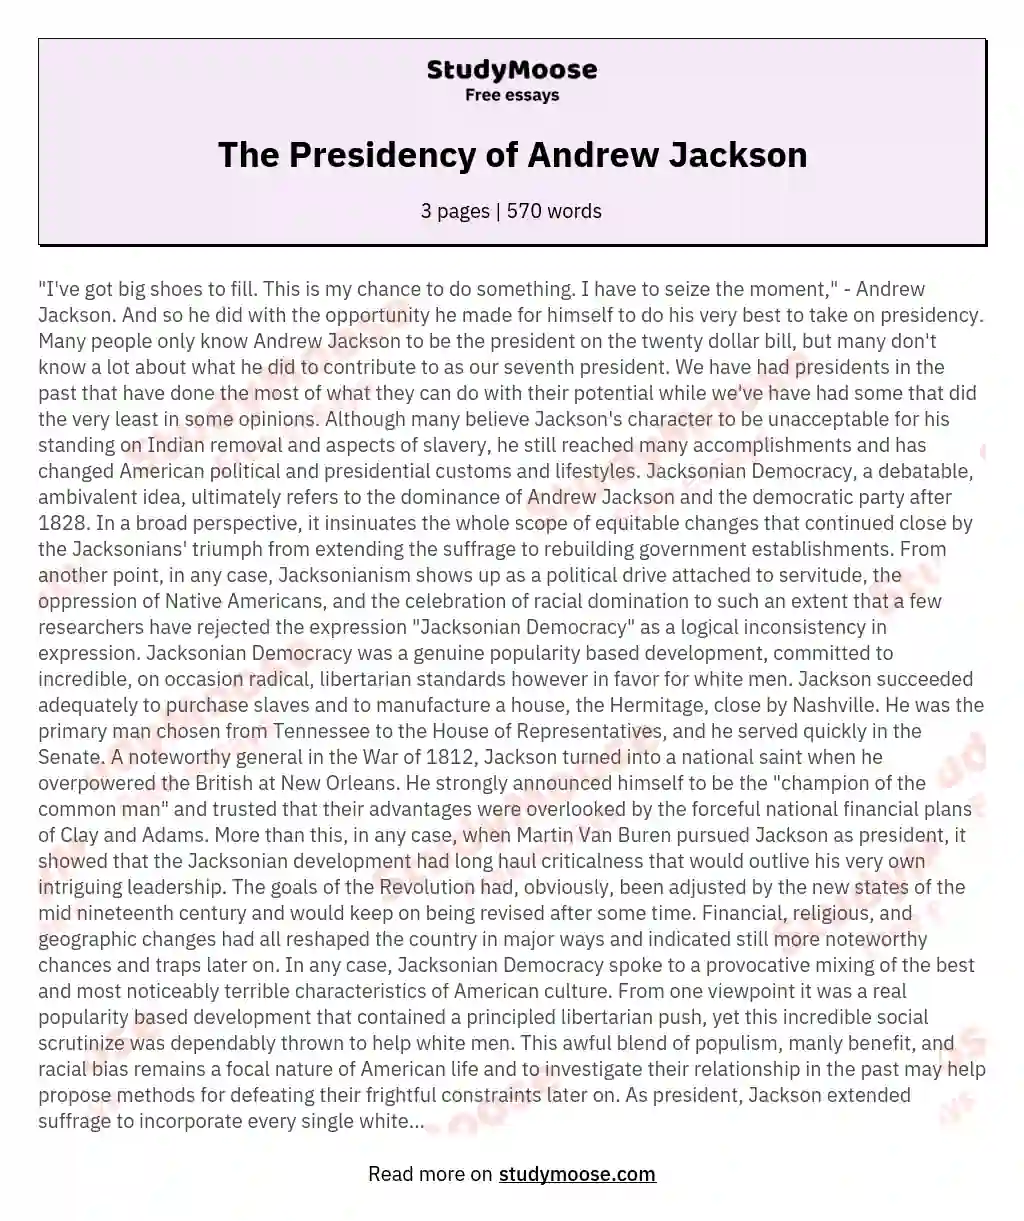 The Presidency of Andrew Jackson essay